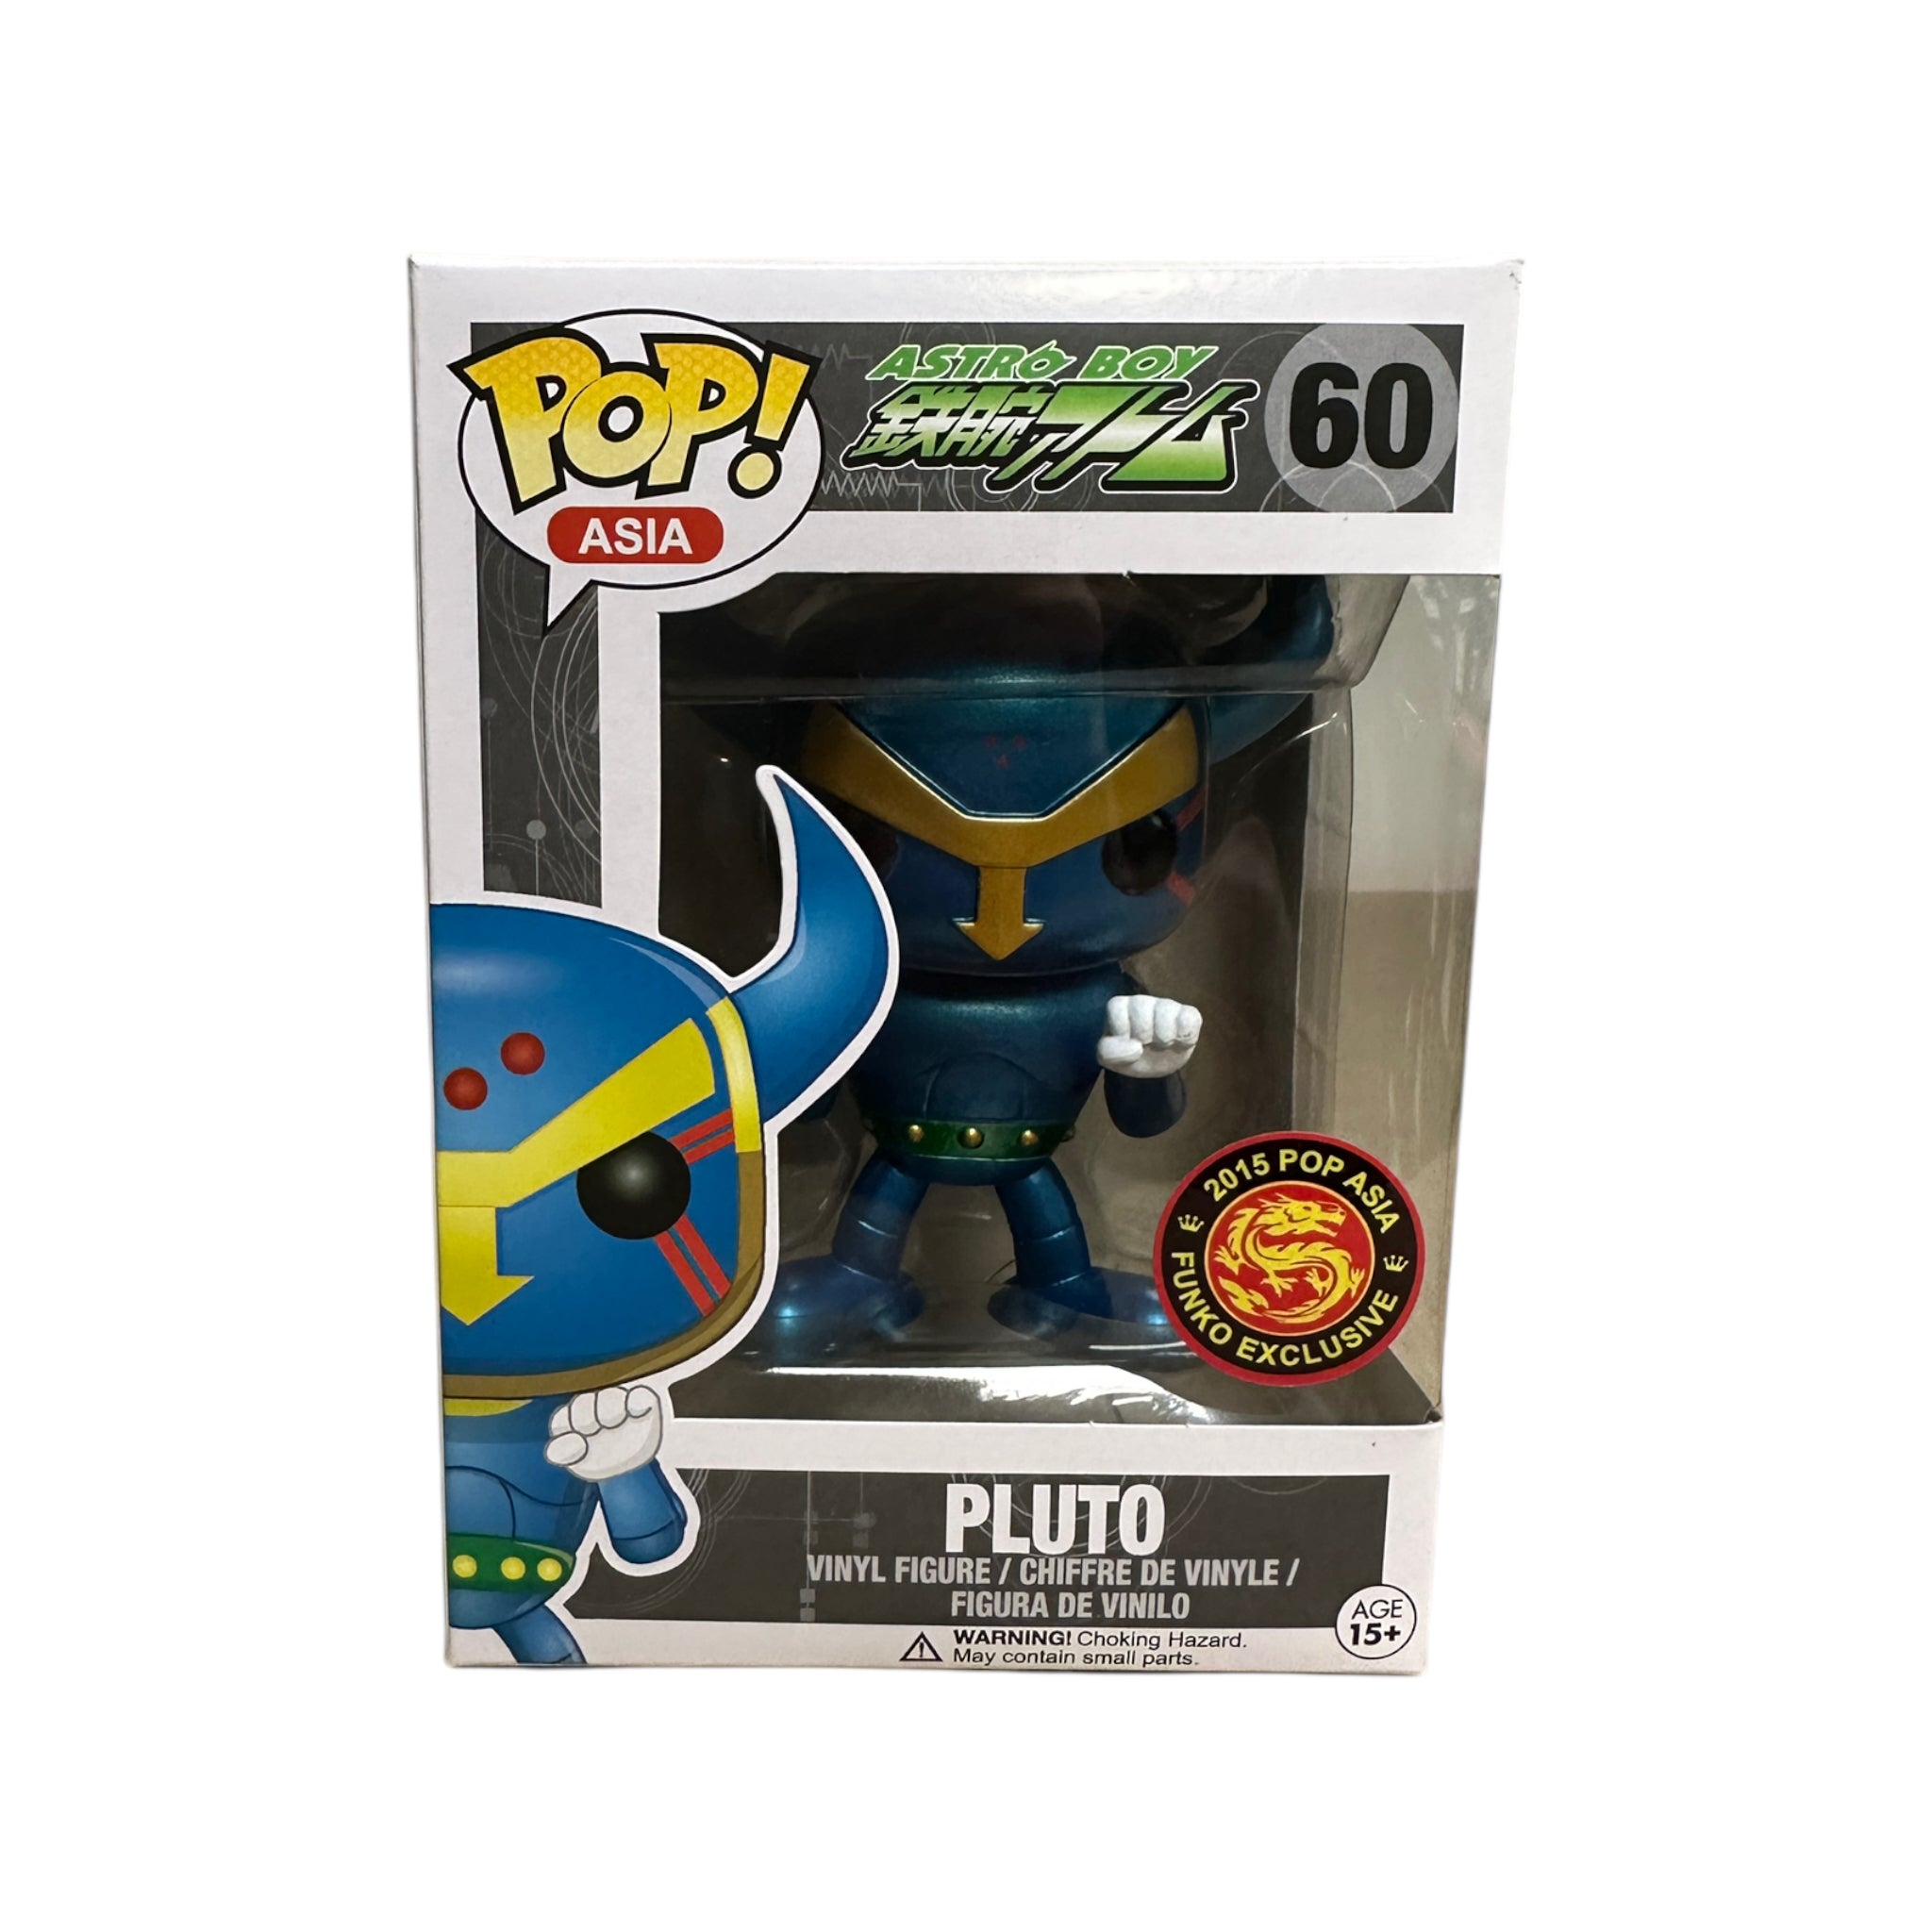 Pluto #60 (Metallic) Funko Pop! - Astro Boy - 2015 Asia Exclusive - Condition 8.75/10